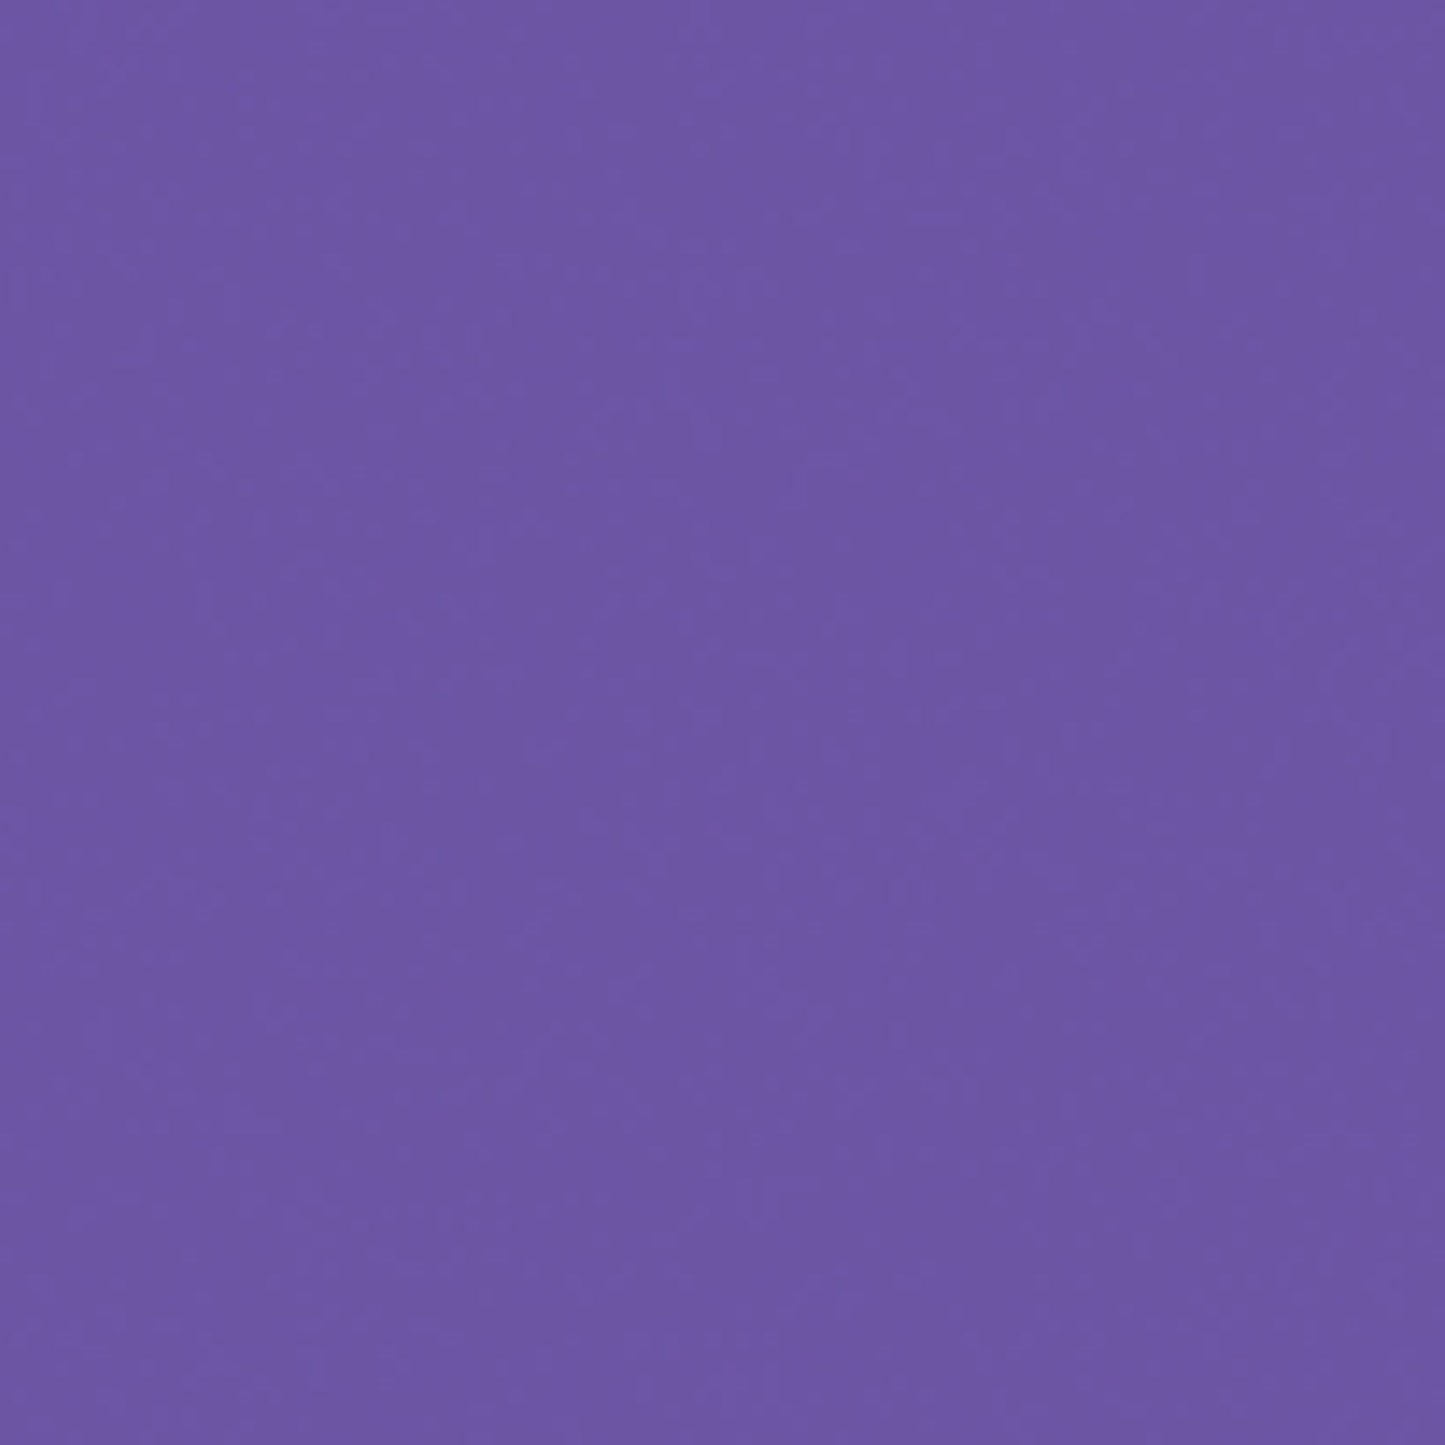 Tranquil Medallion Purple Quilt Set, Full - Queen